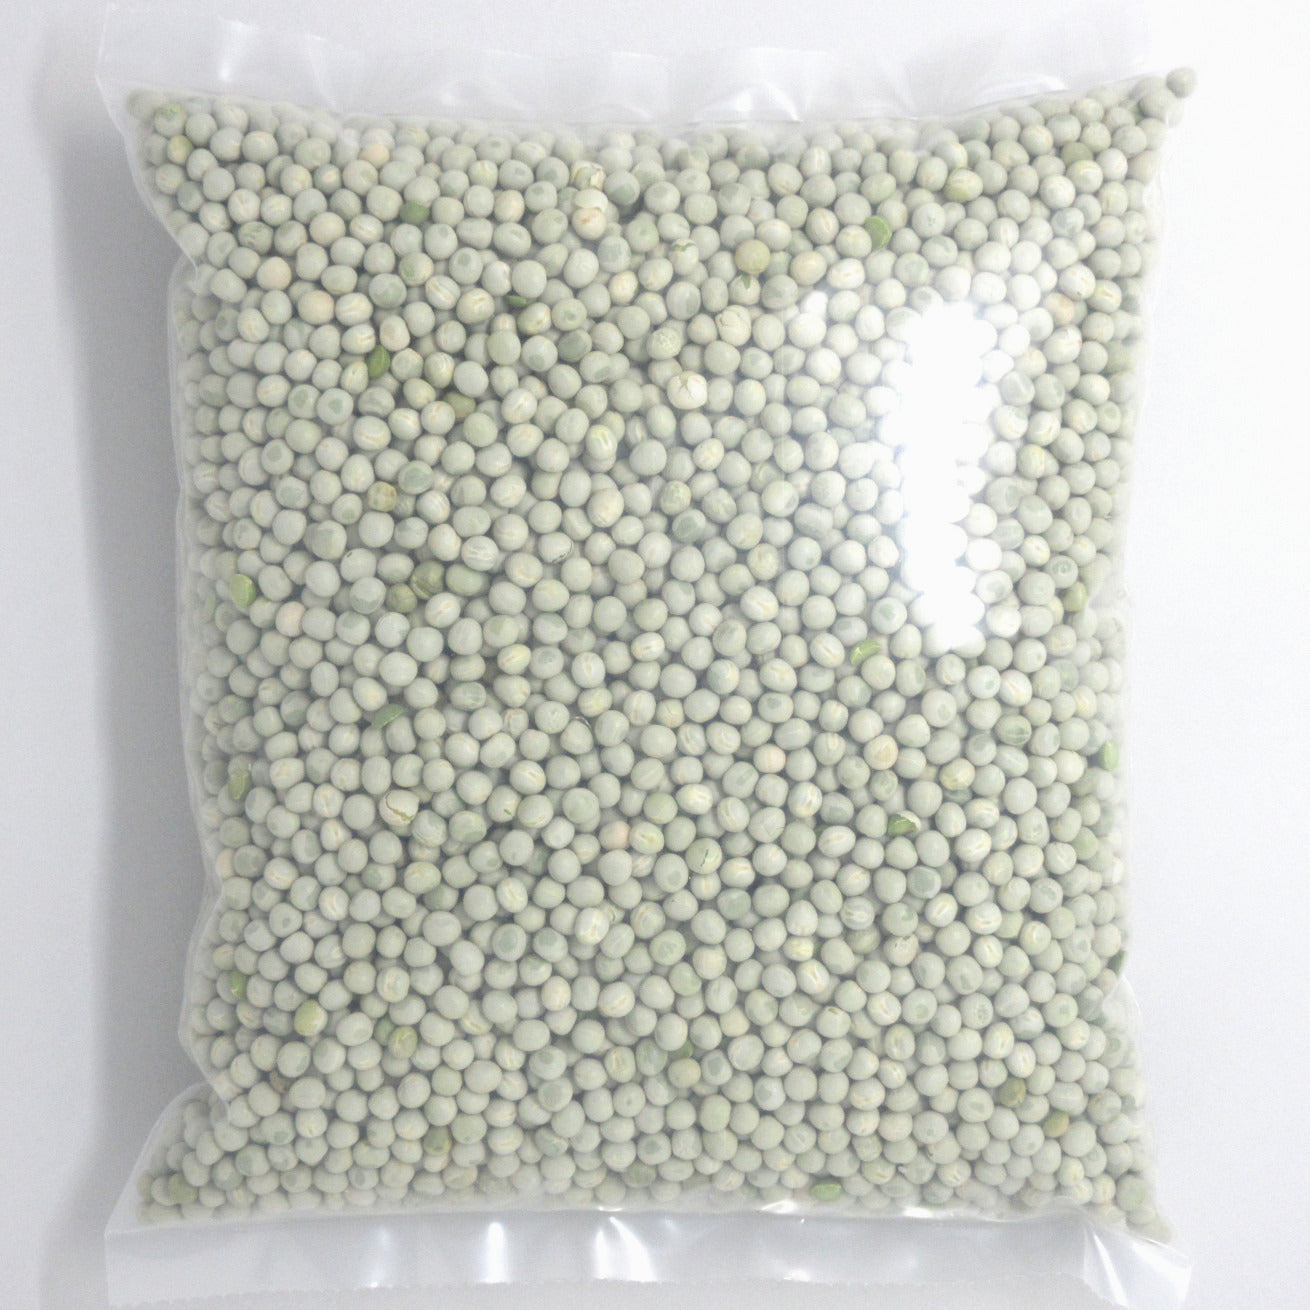 Flour Barrel product image - Whole Green Peas